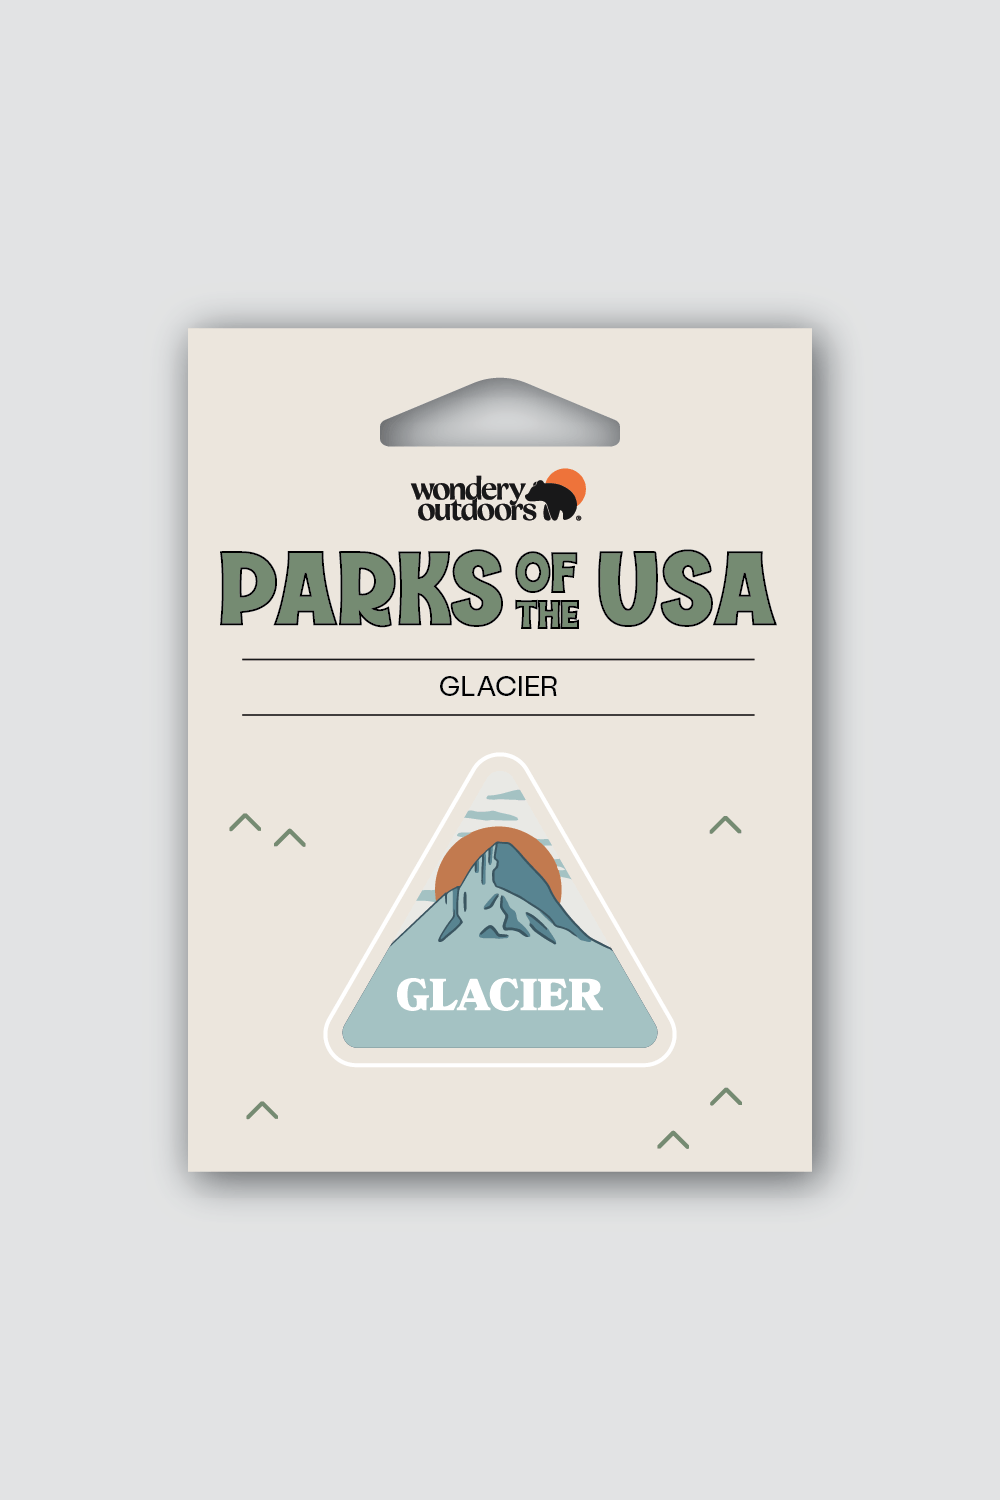 #national park_glacier _USA National Parks souvenir sticker gift sets